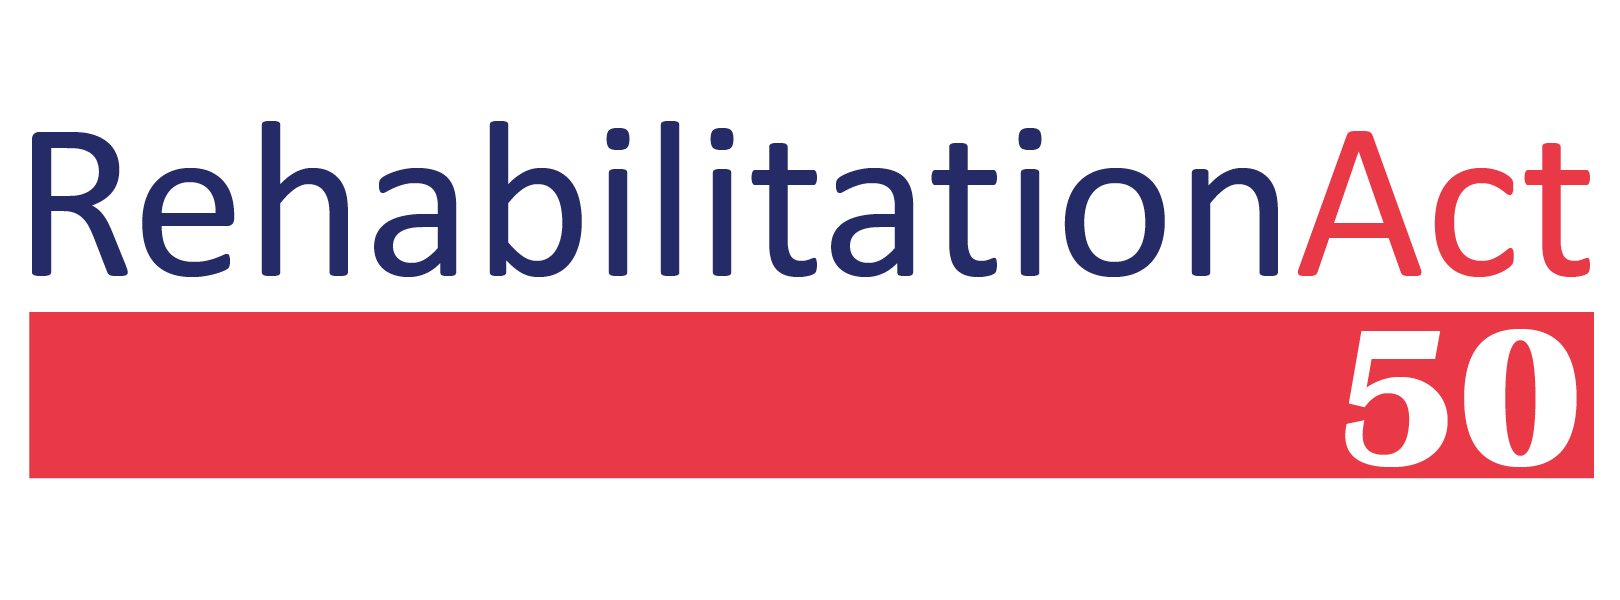 Rehabilitation Act 50 logo.